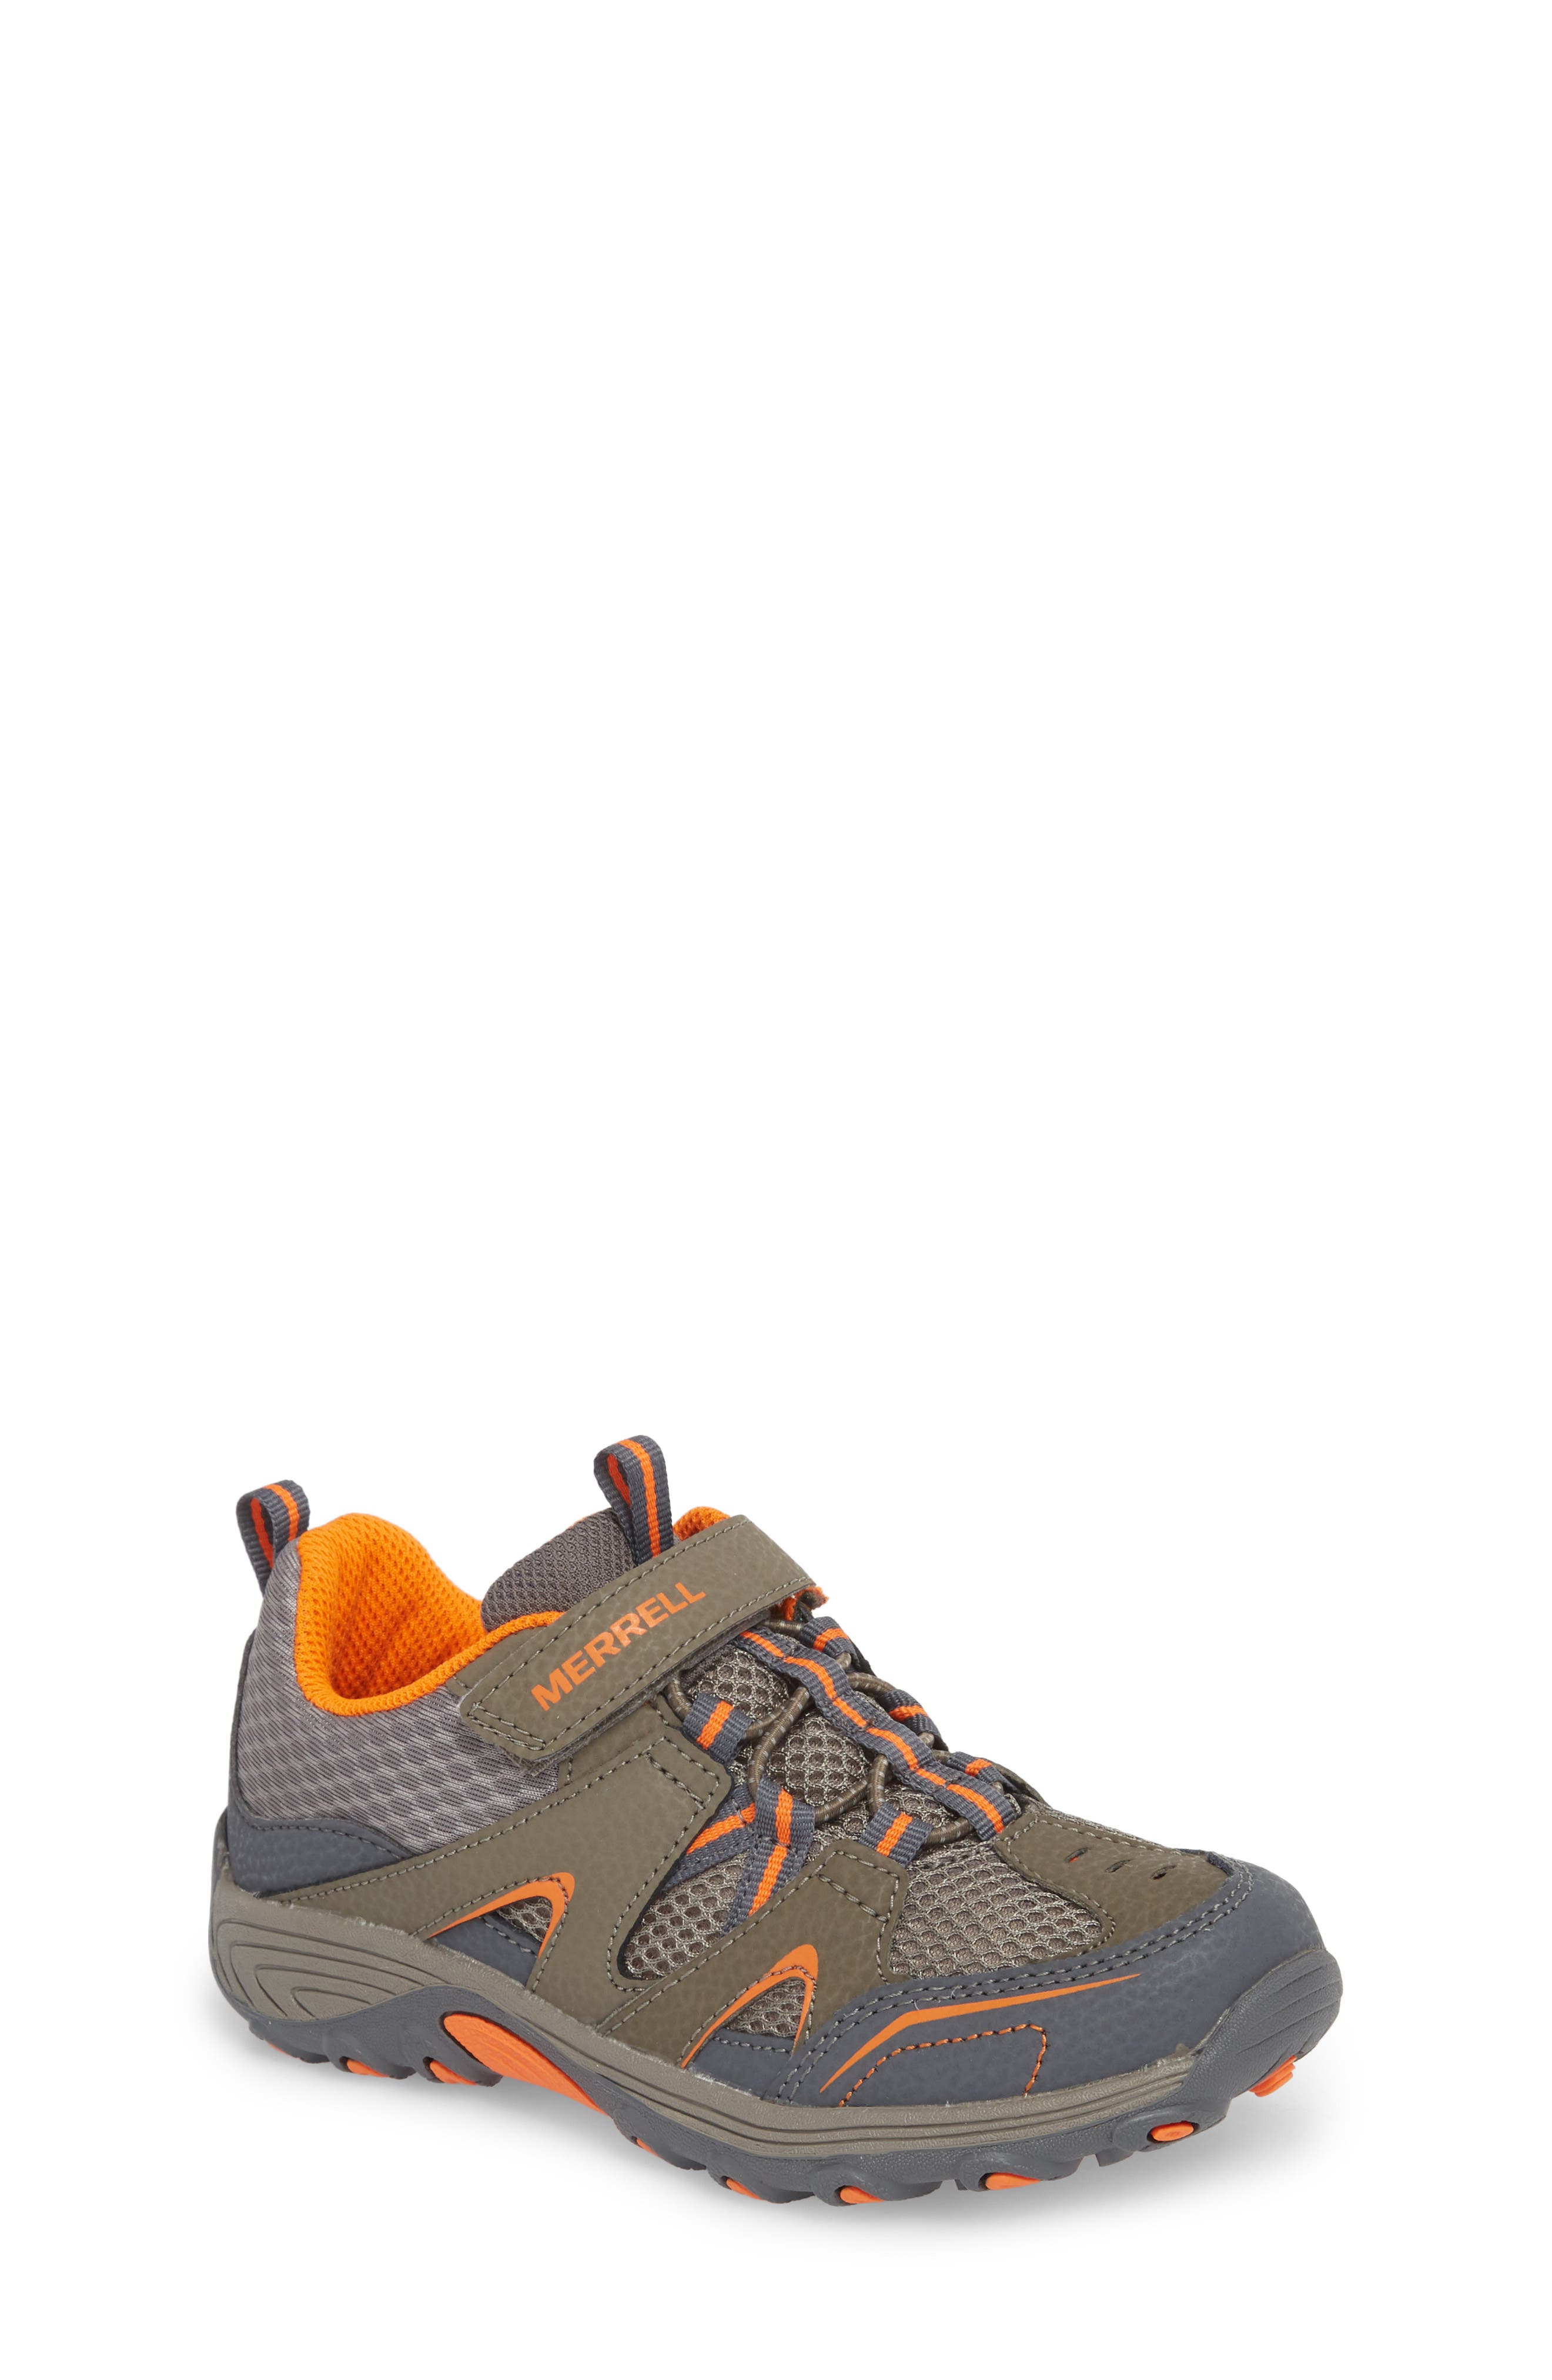 merrell trail chaser hiking shoe